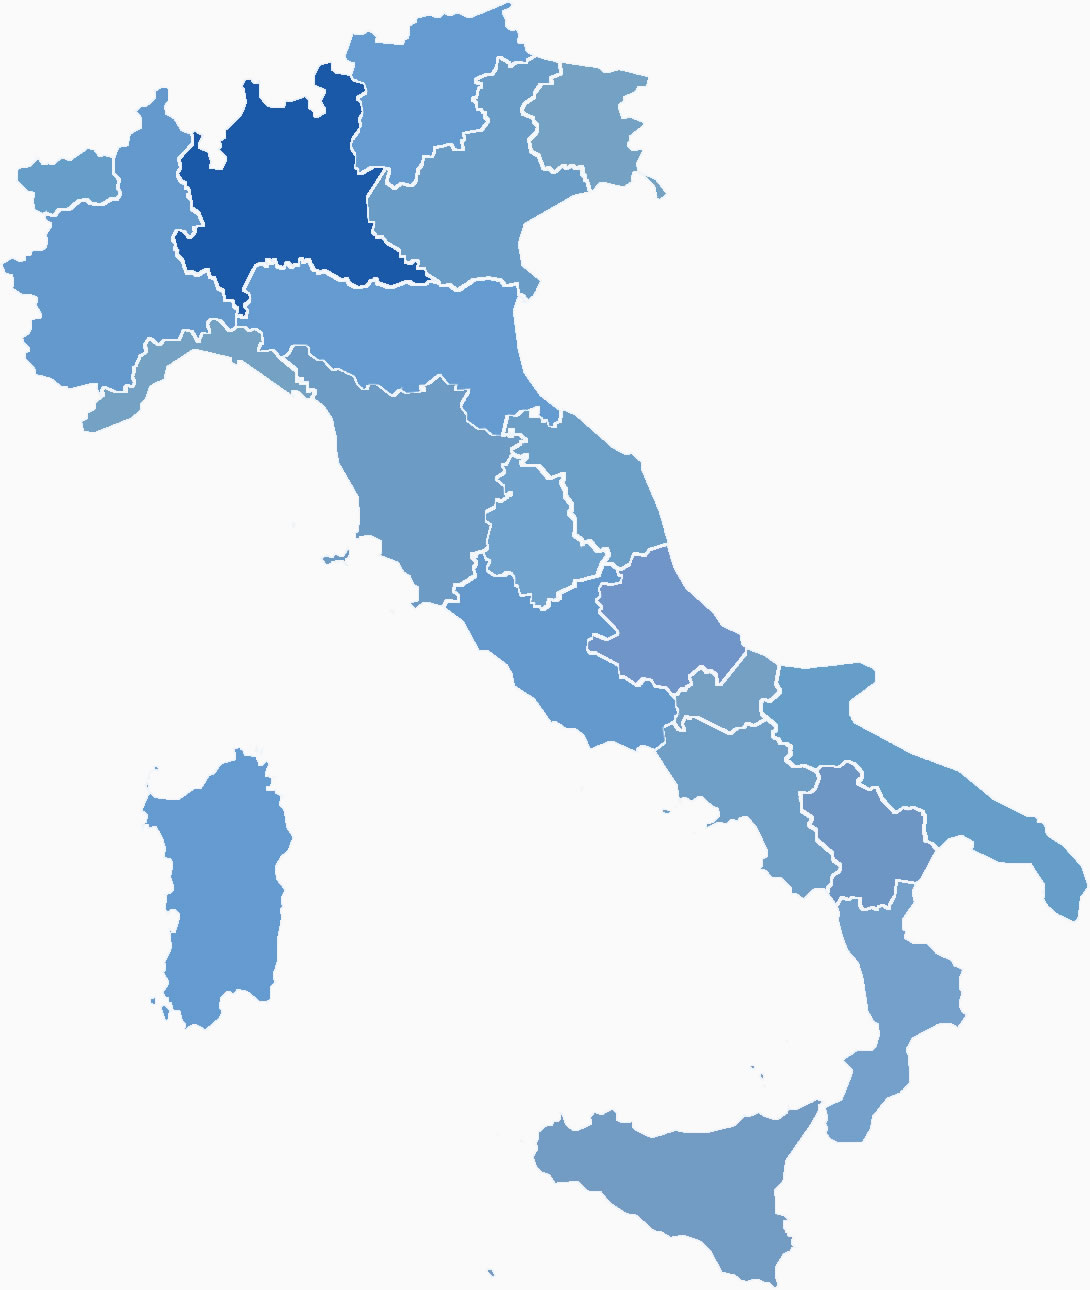 Regio Lombardije in Italië